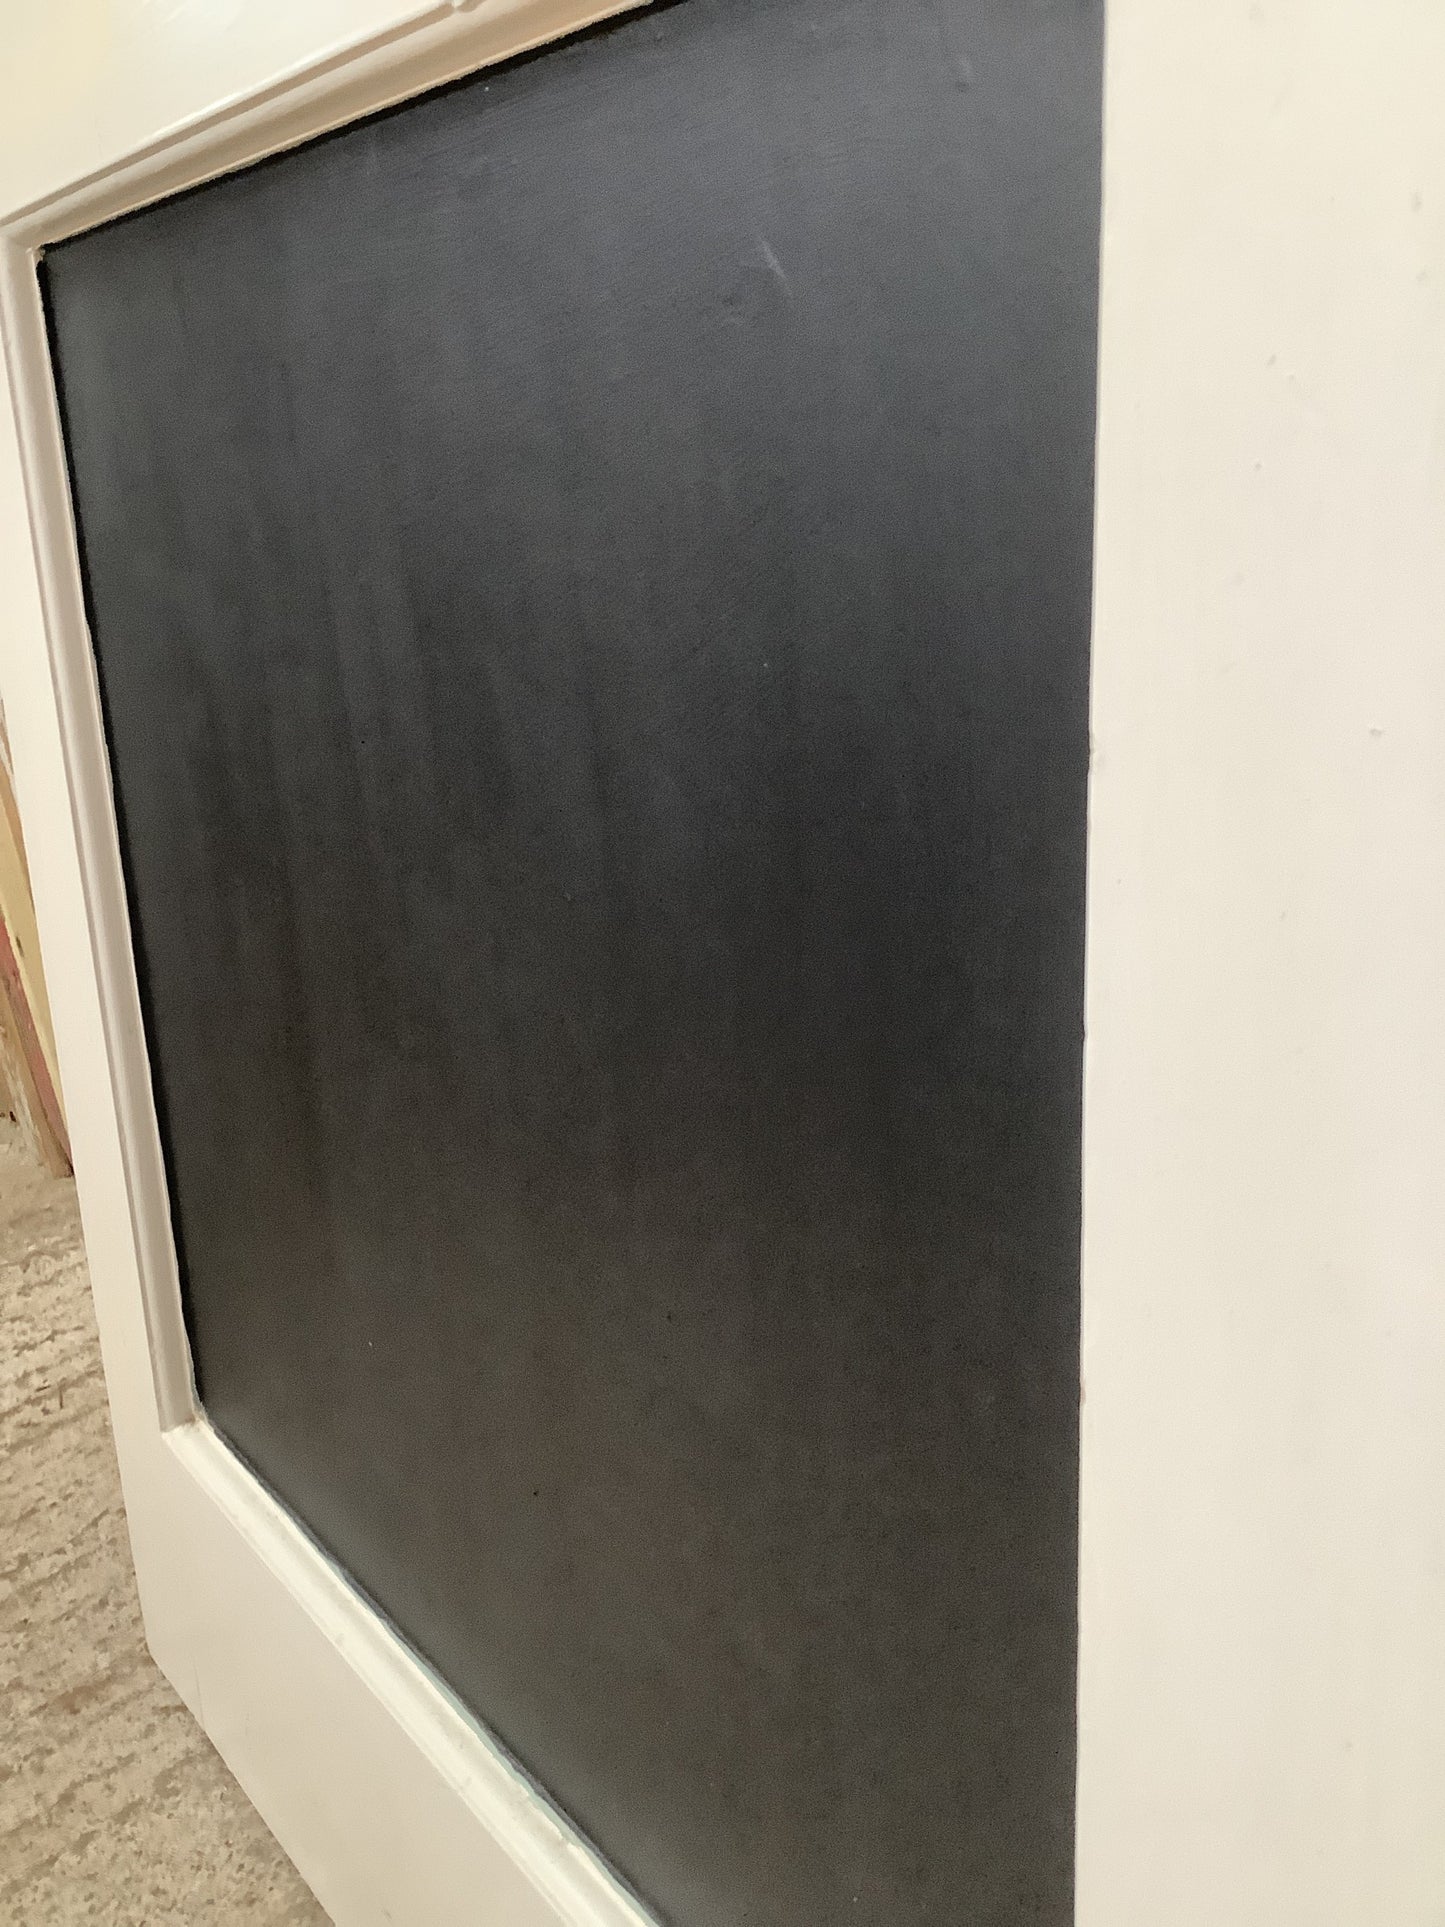 Repurposed White Painted Pine Doubled Sided Panel Blackboard Door 2'7"H 2'5" W